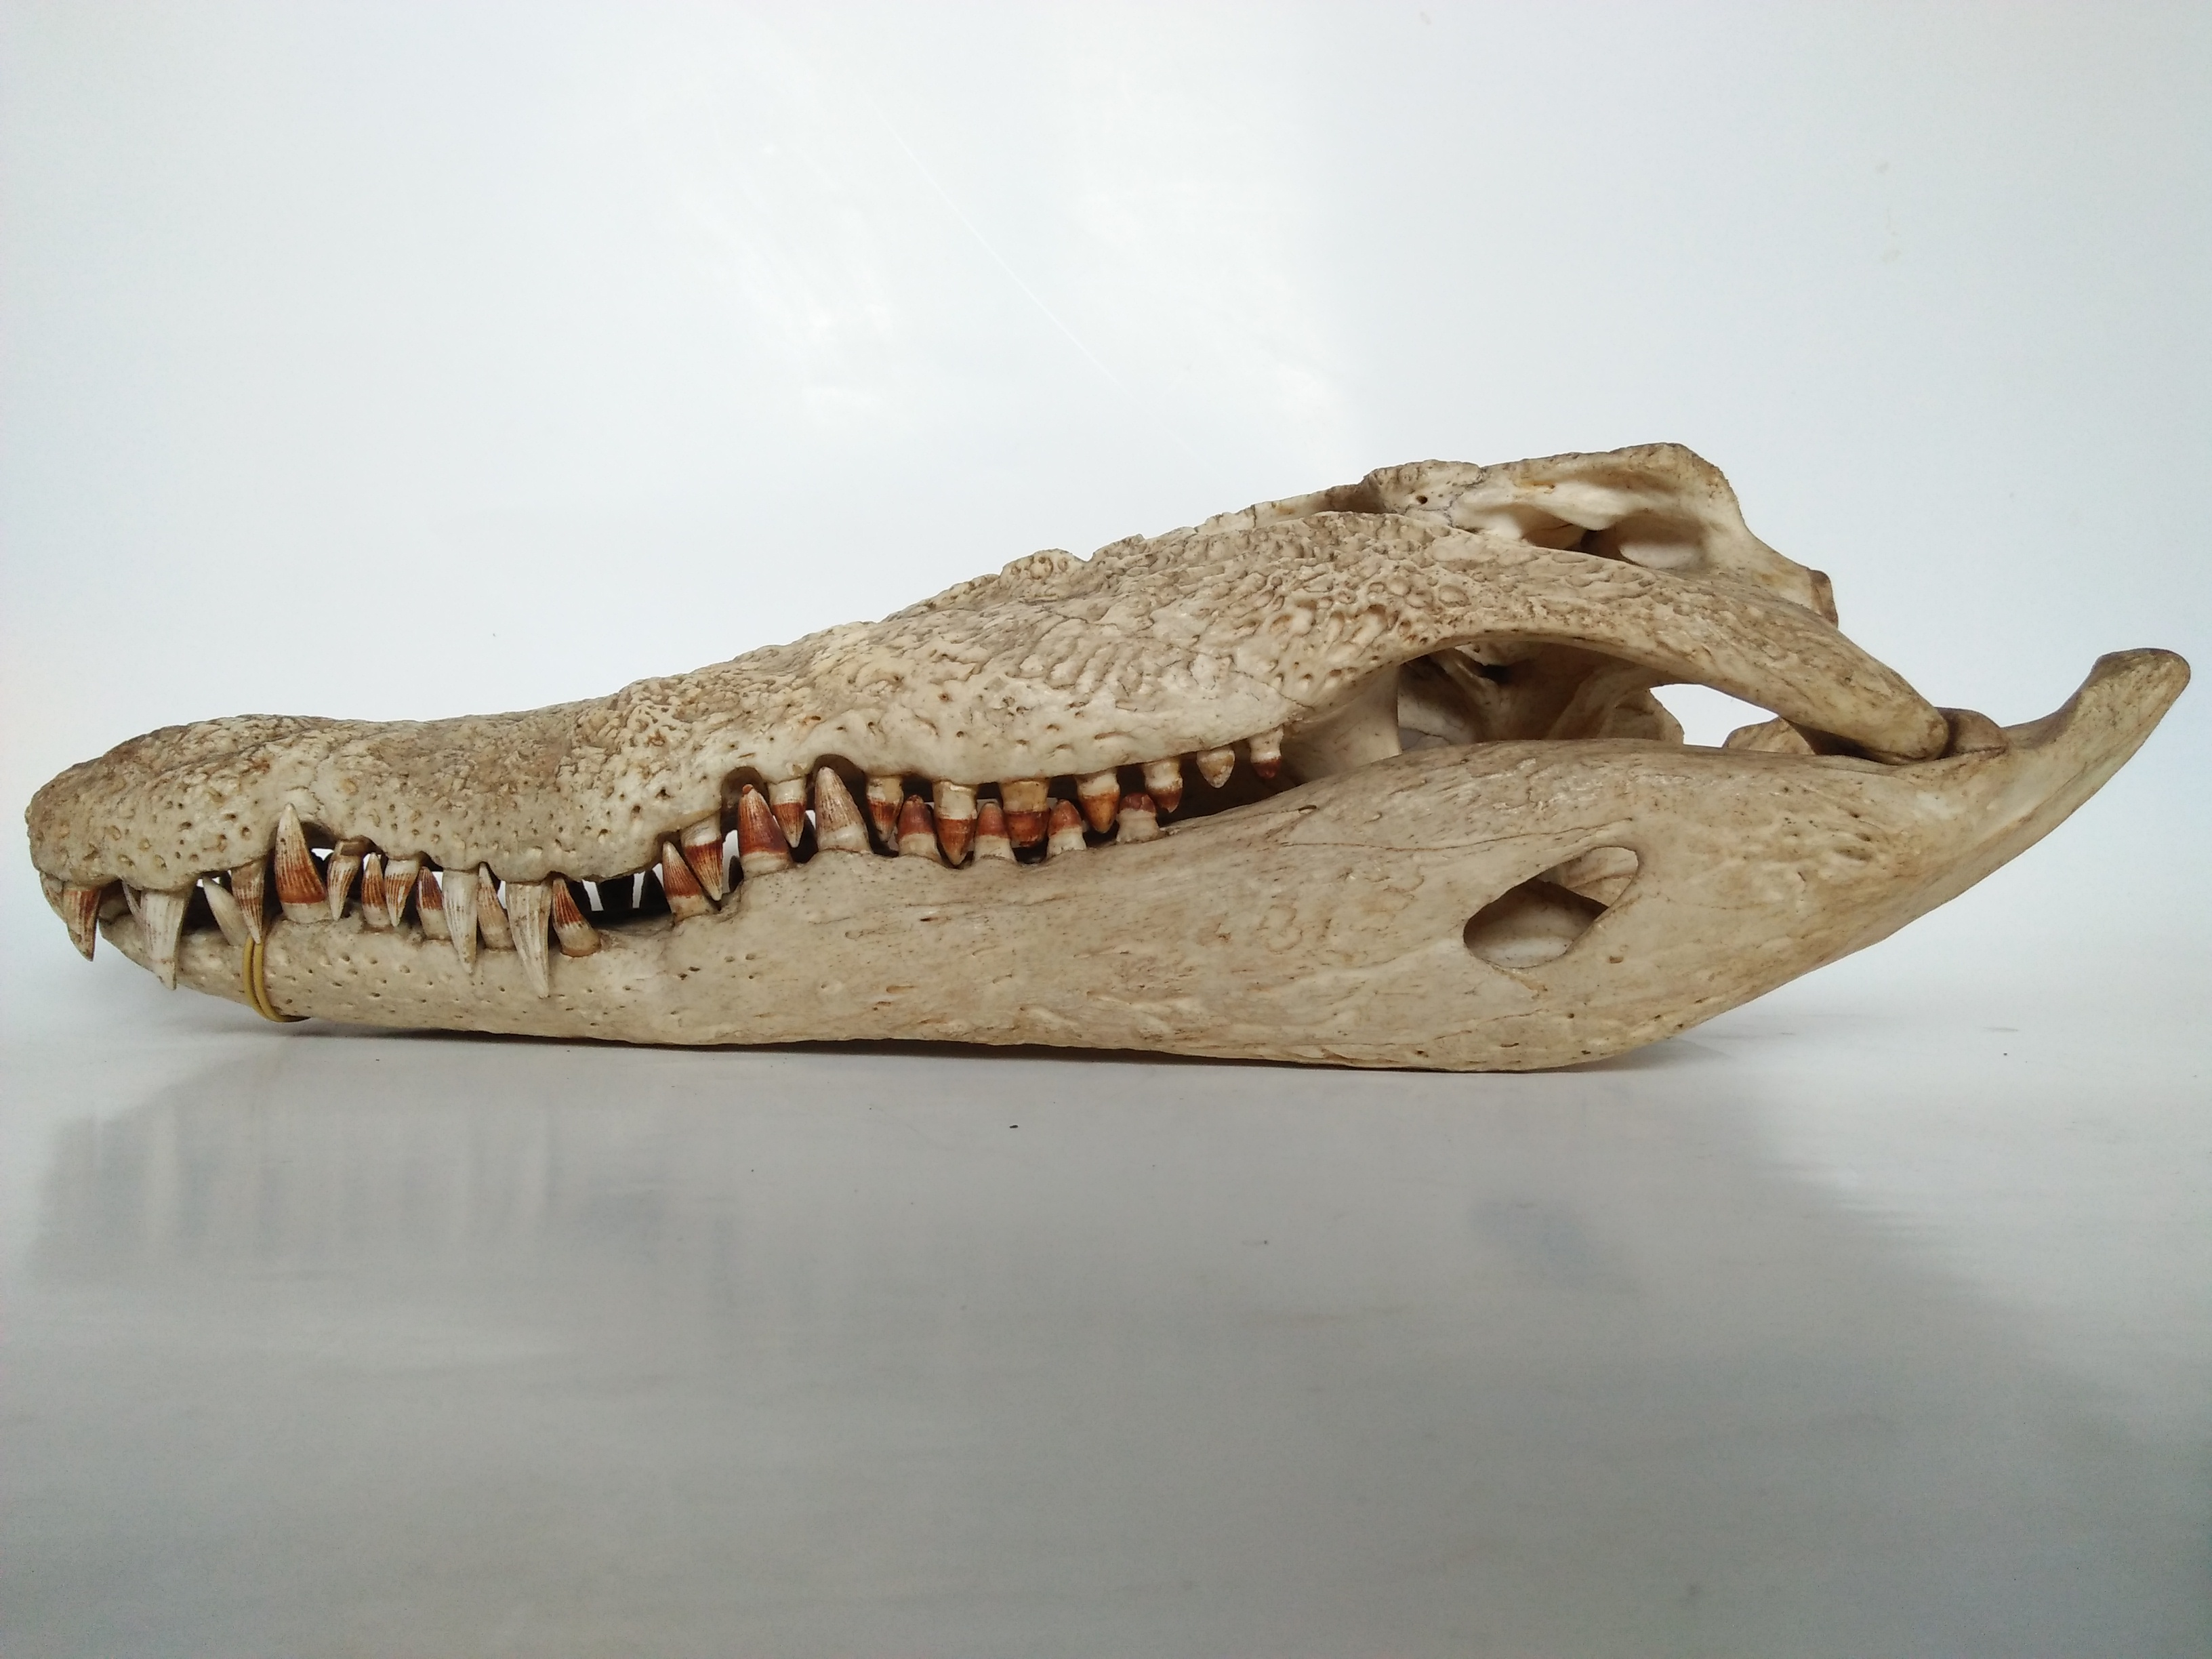 Contoh awetan kering berupa tengkorak buaya muara (Crocodylus porosus). Foto: Ganjar Cahyadi